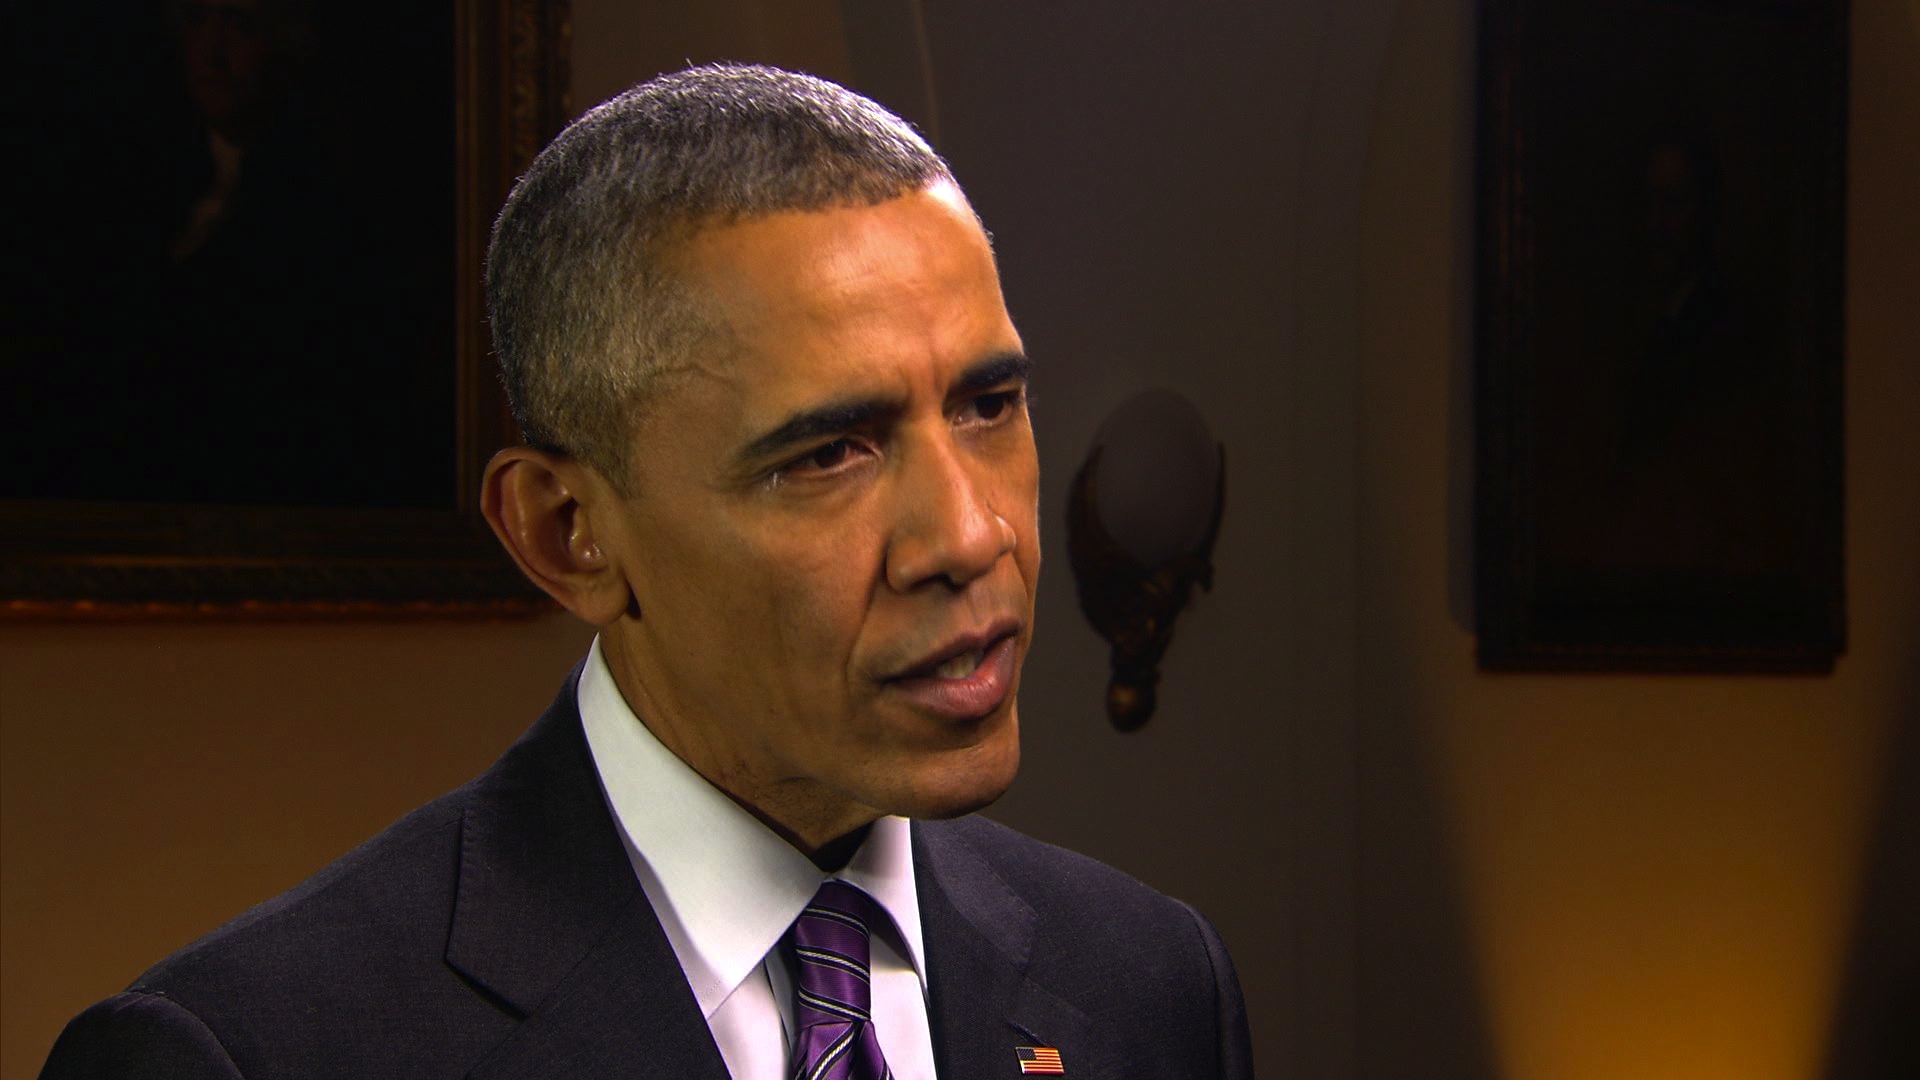 President Obama to visit with families of San Bernardino victims - CBS News